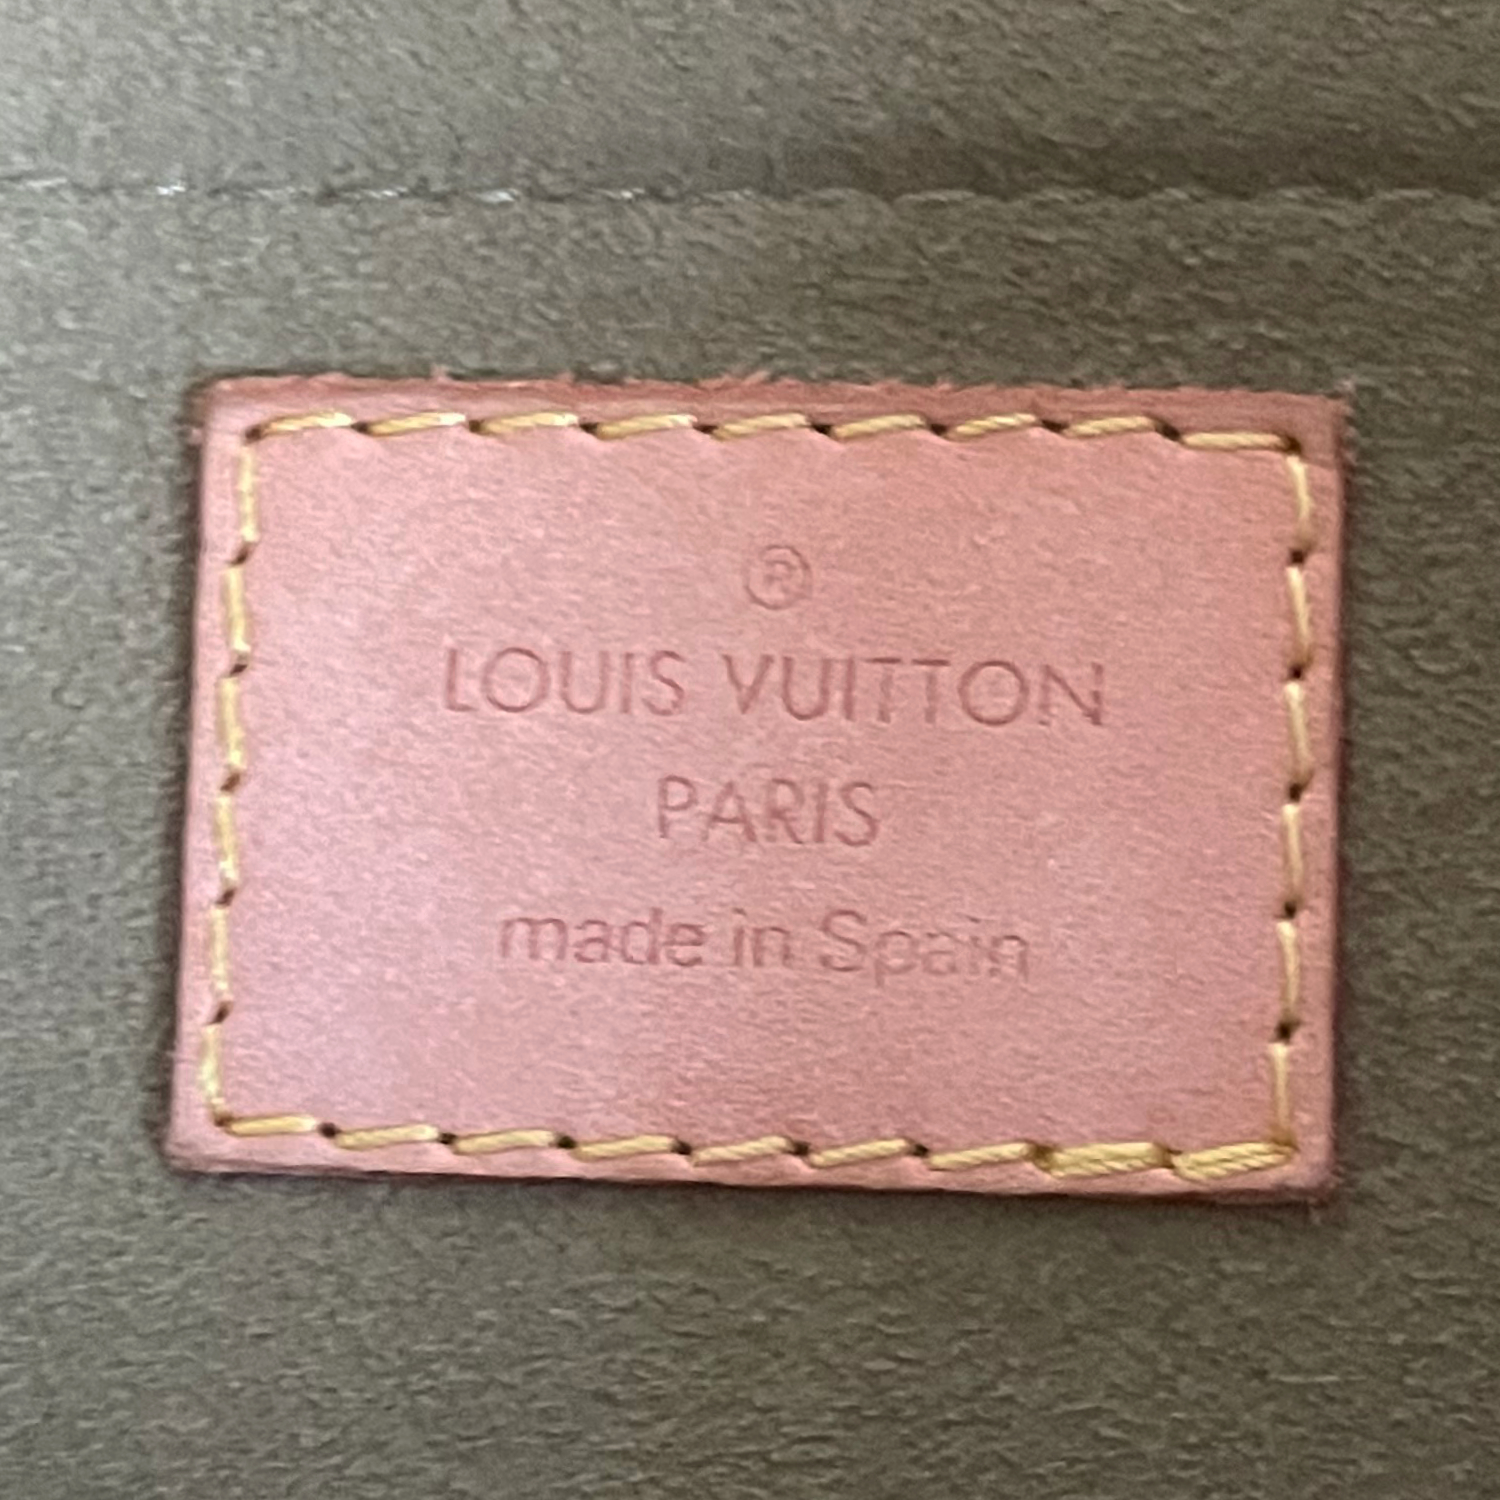 LOUIS VUITTON PINK DENIM PLEATY BAG